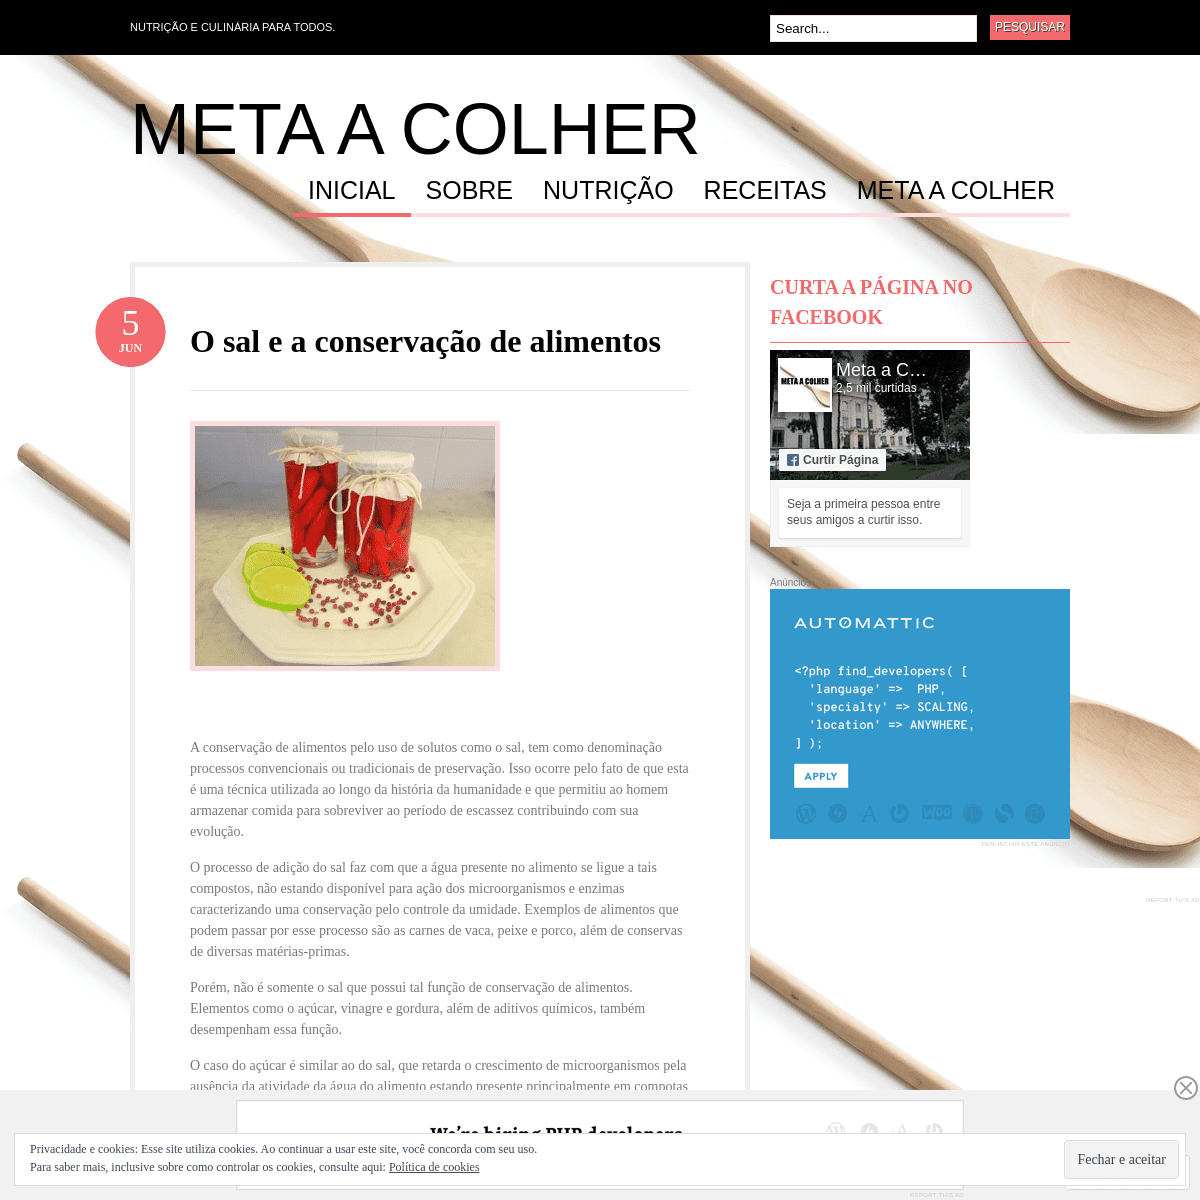 A complete backup of metacolher.wordpress.com